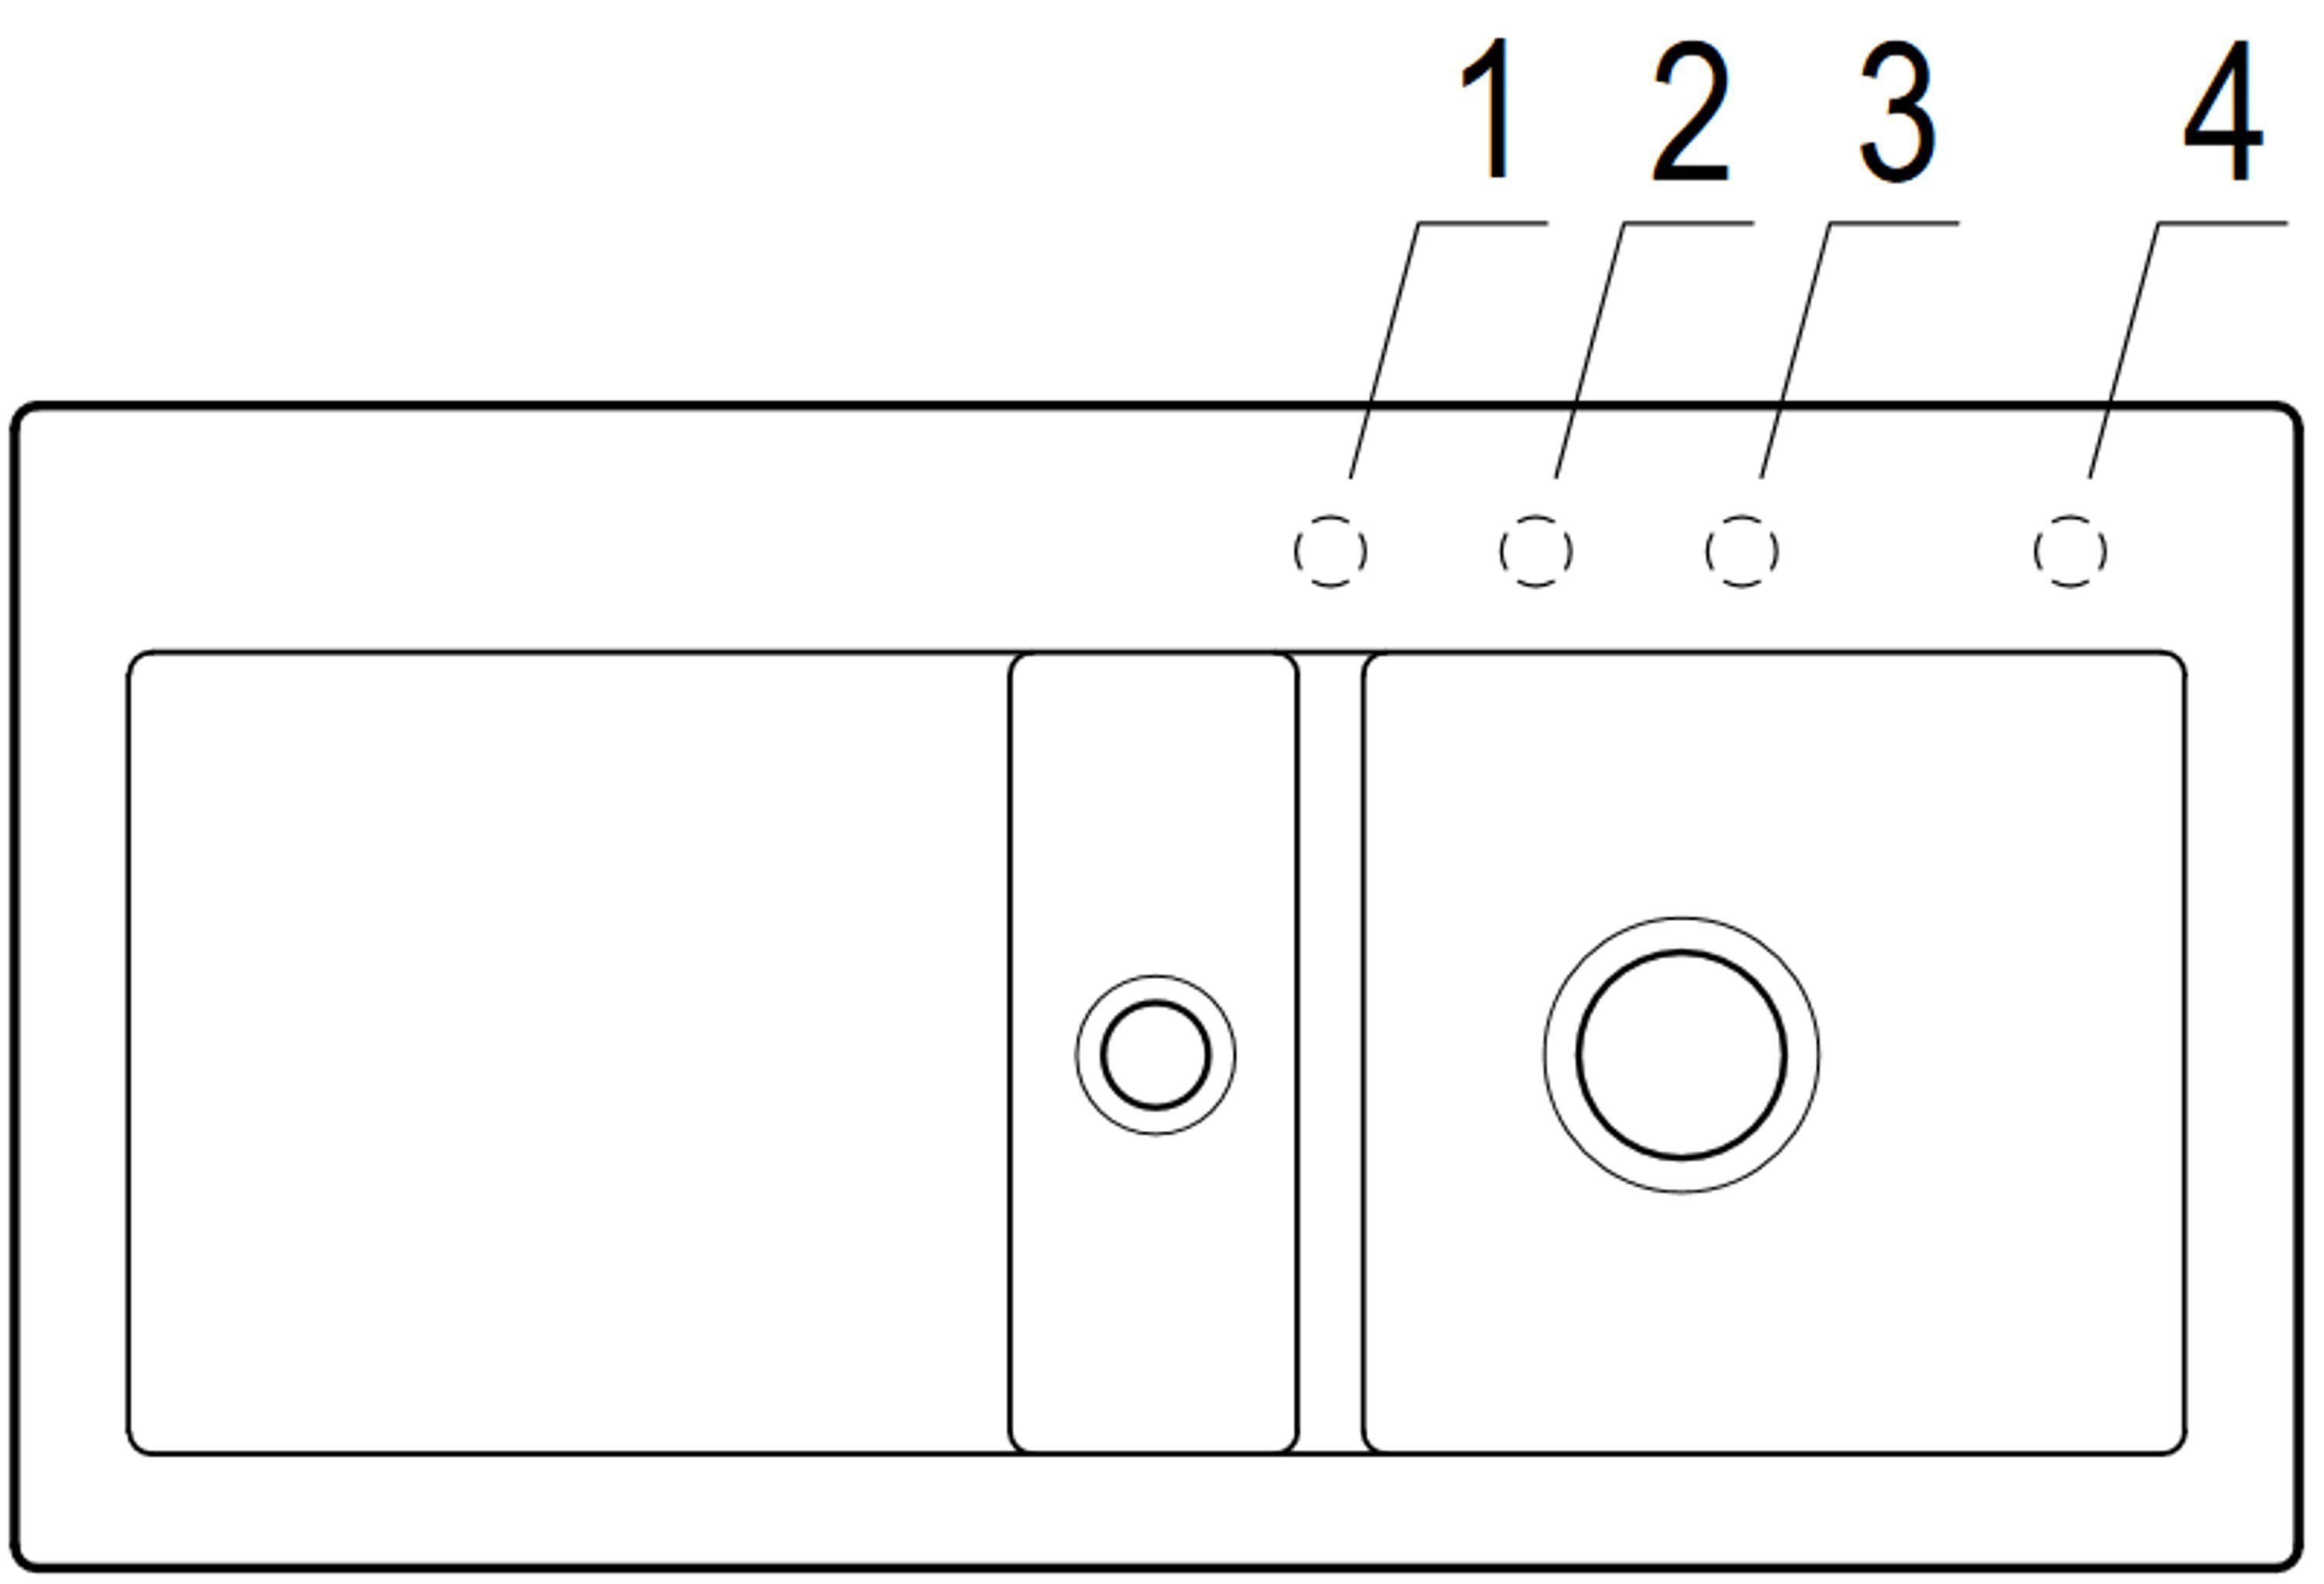 100/22 cm, Boch und Geschmacksmuster RW, & 02 Becken Villeroy links 6712 rechts geschützt, möglich Küchenspüle Rechteckig,